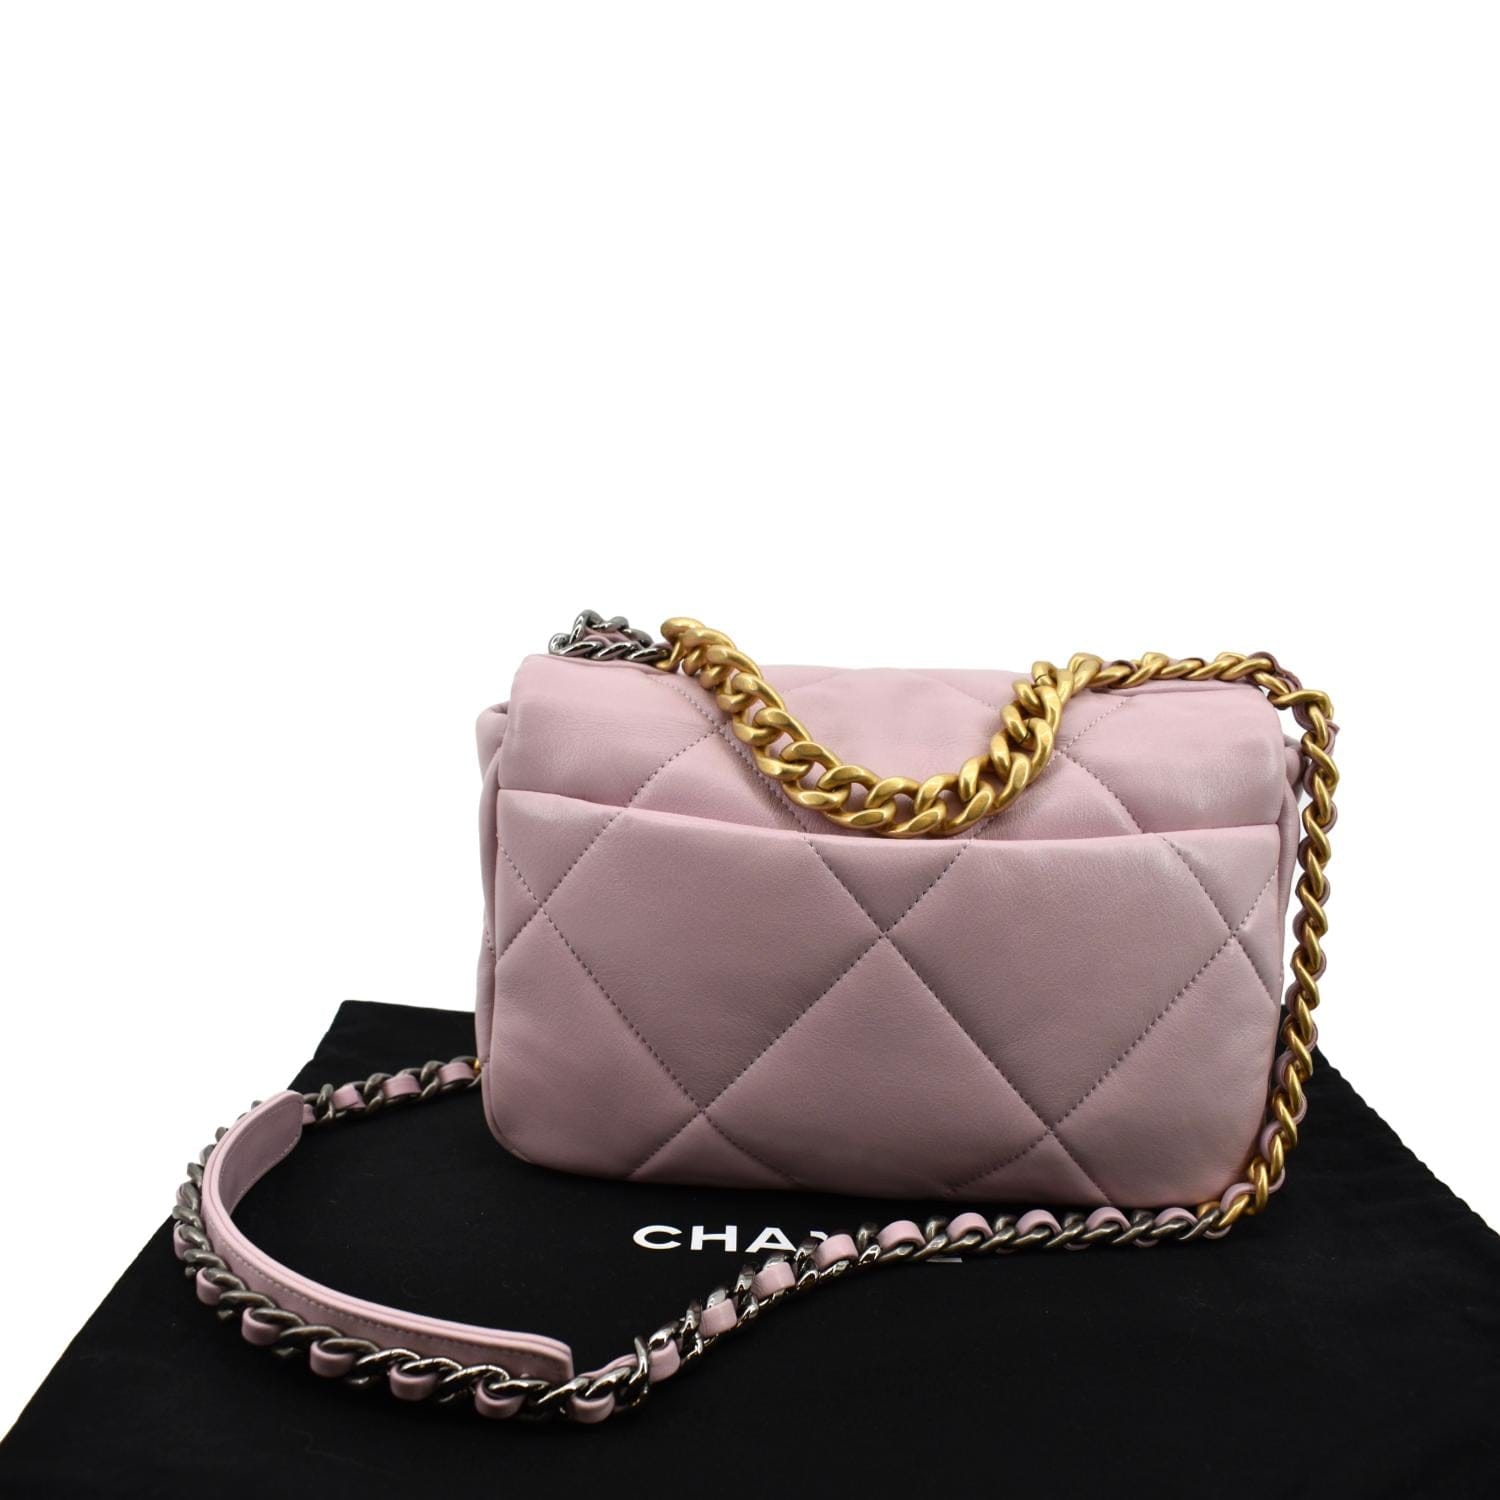 chanel 19 flap bag pink